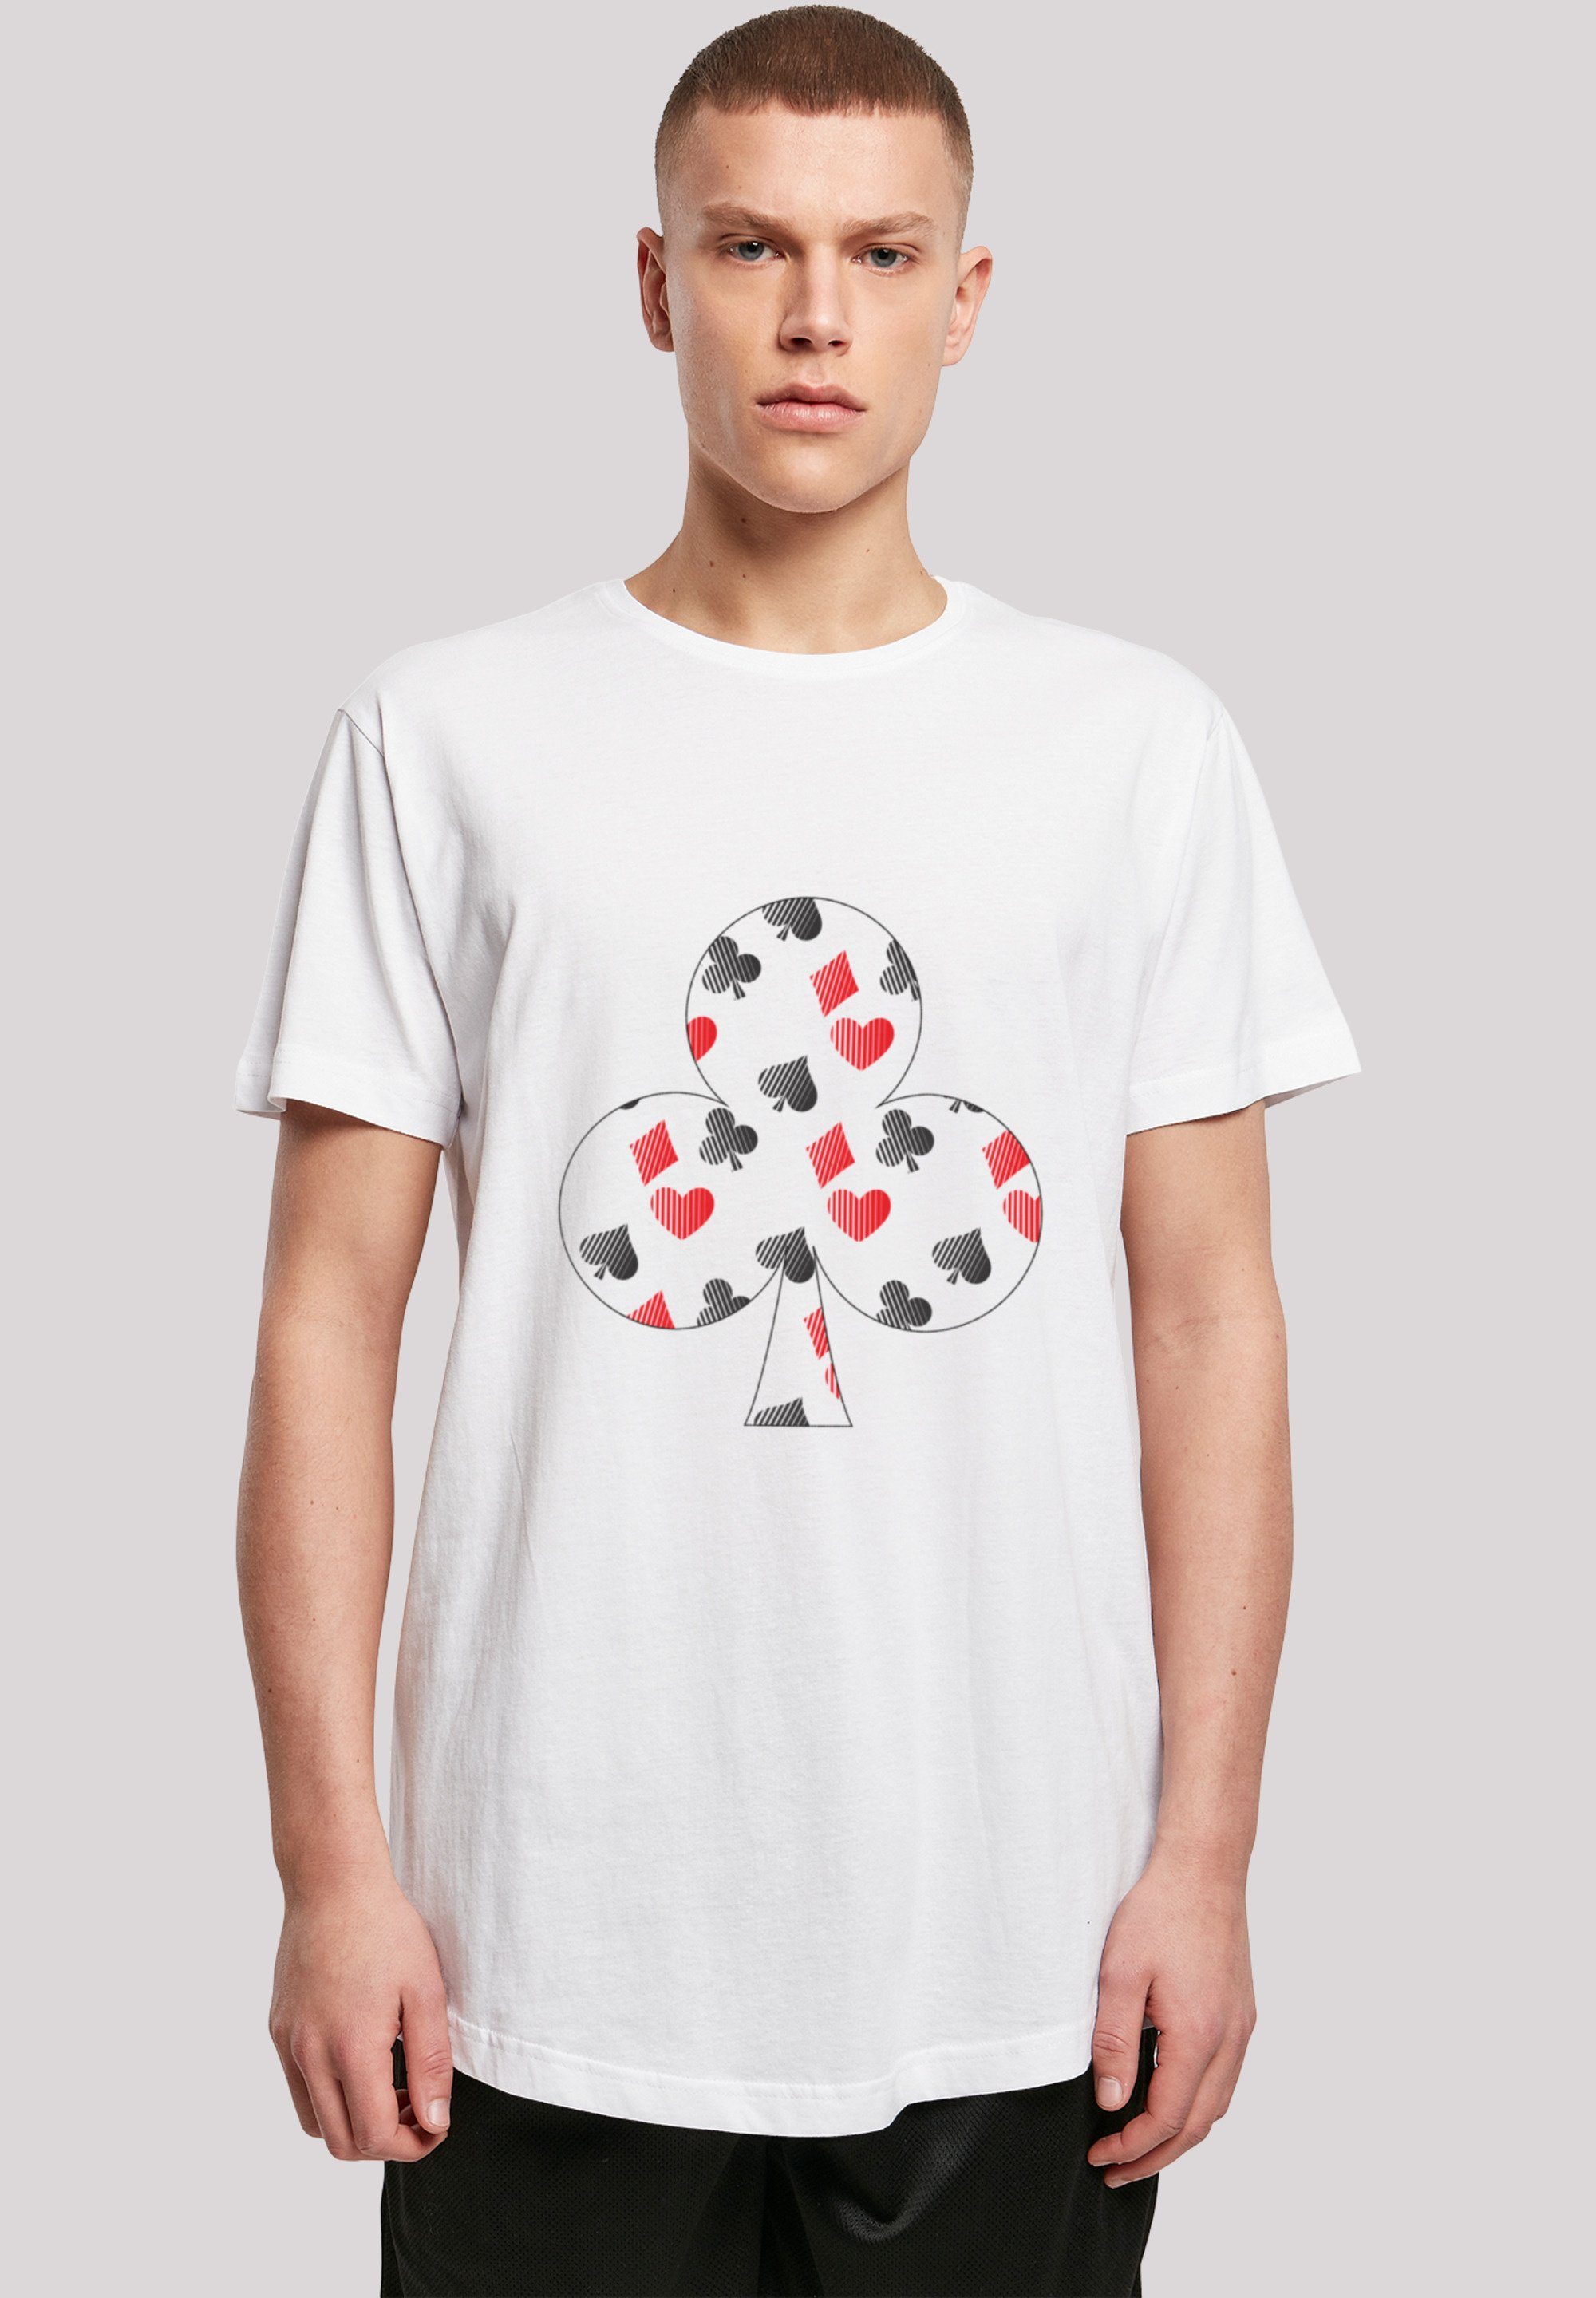 F4NT4STIC T-Shirt Print Kartenspiel Karo Poker Herz Kreuz Pik